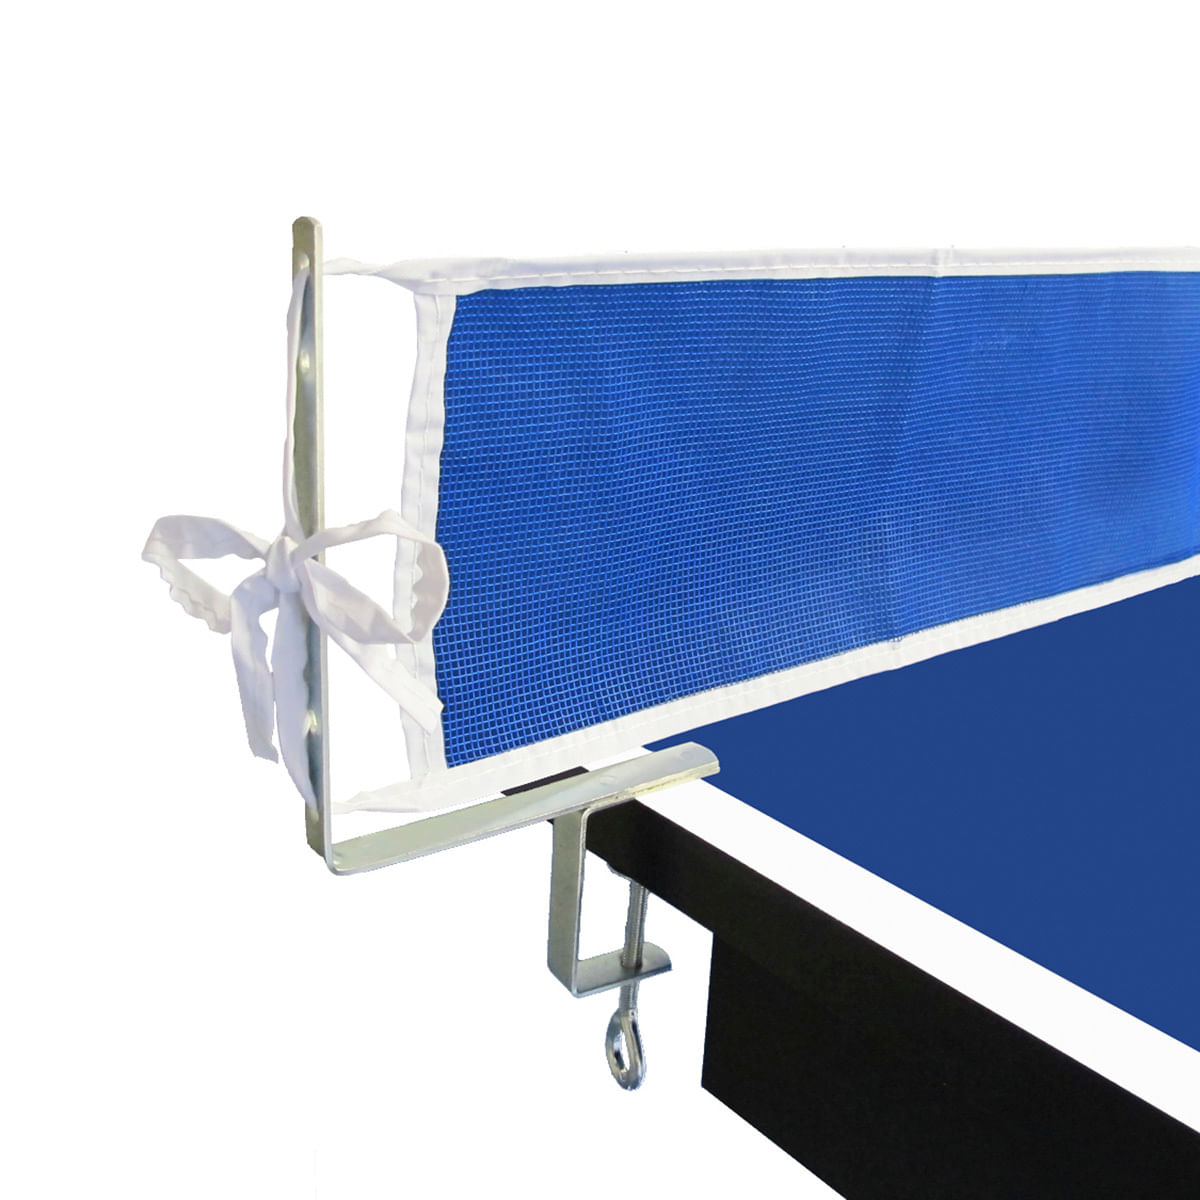 Mesa de Ping Pong com Kit Completo Klopf - Casa & Vídeo